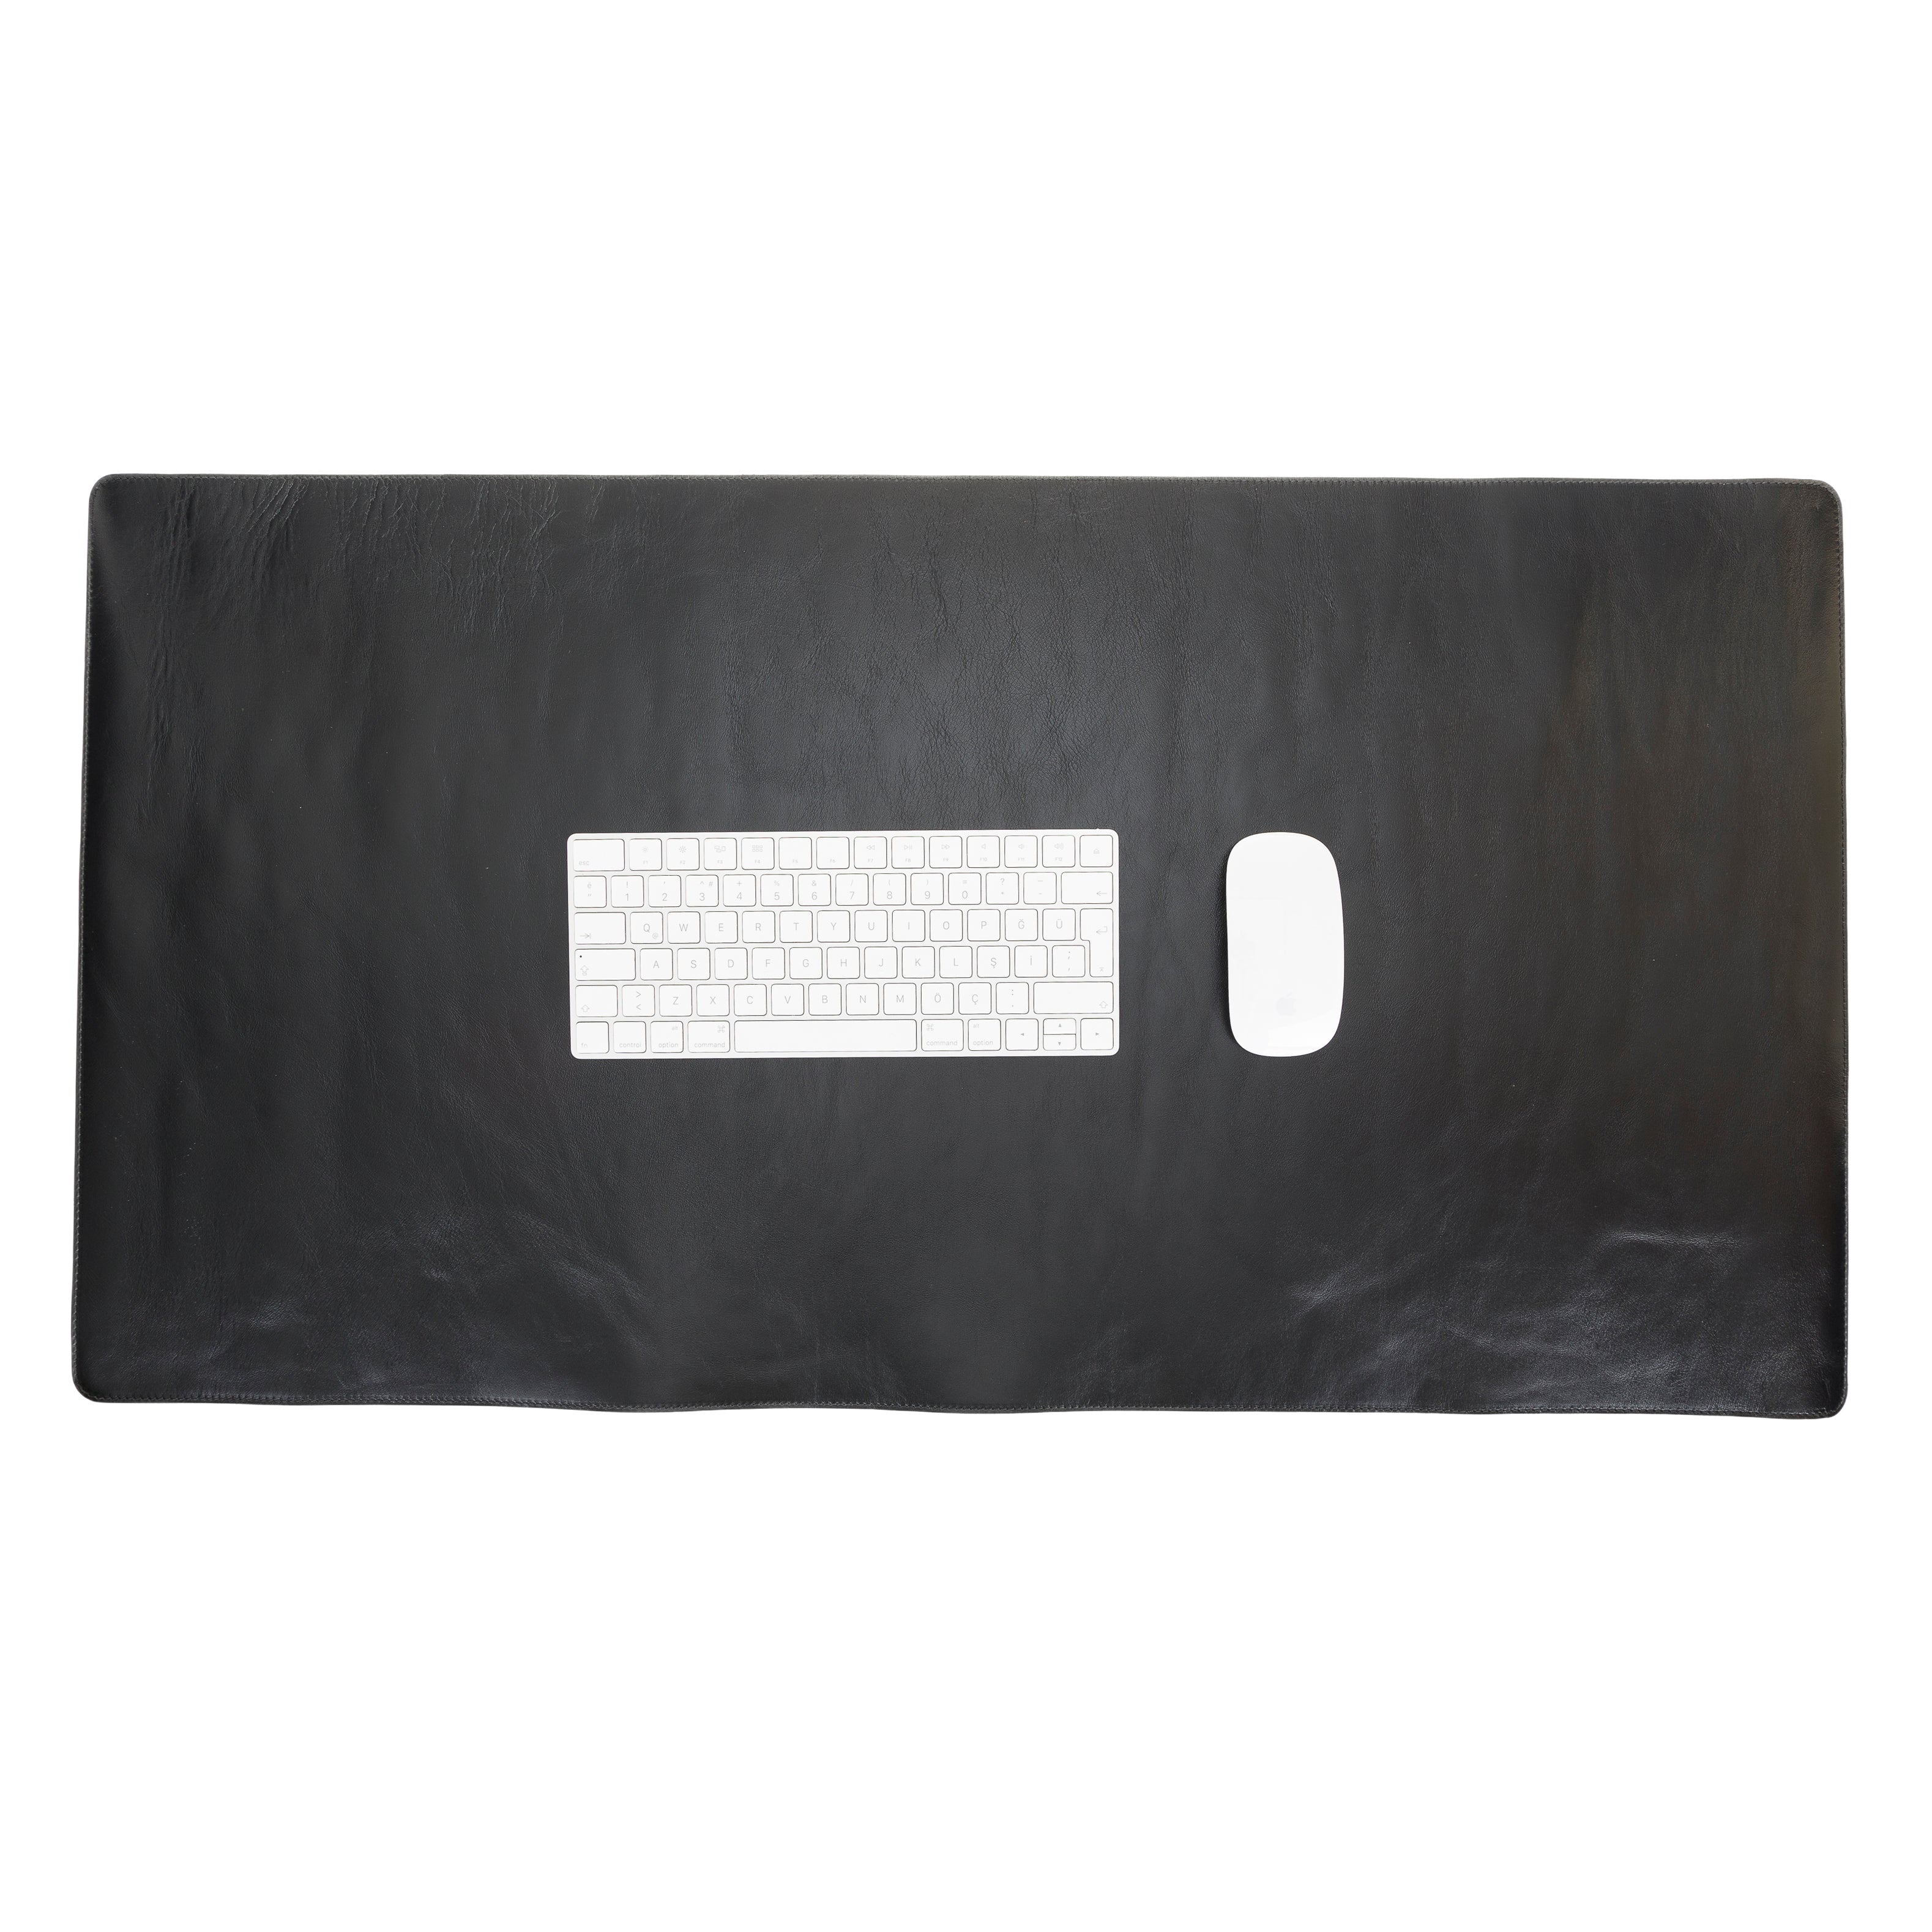 DelfiCase Genuine Leather Deskmat, Computer Pad, Office Desk Pad (Black) 7